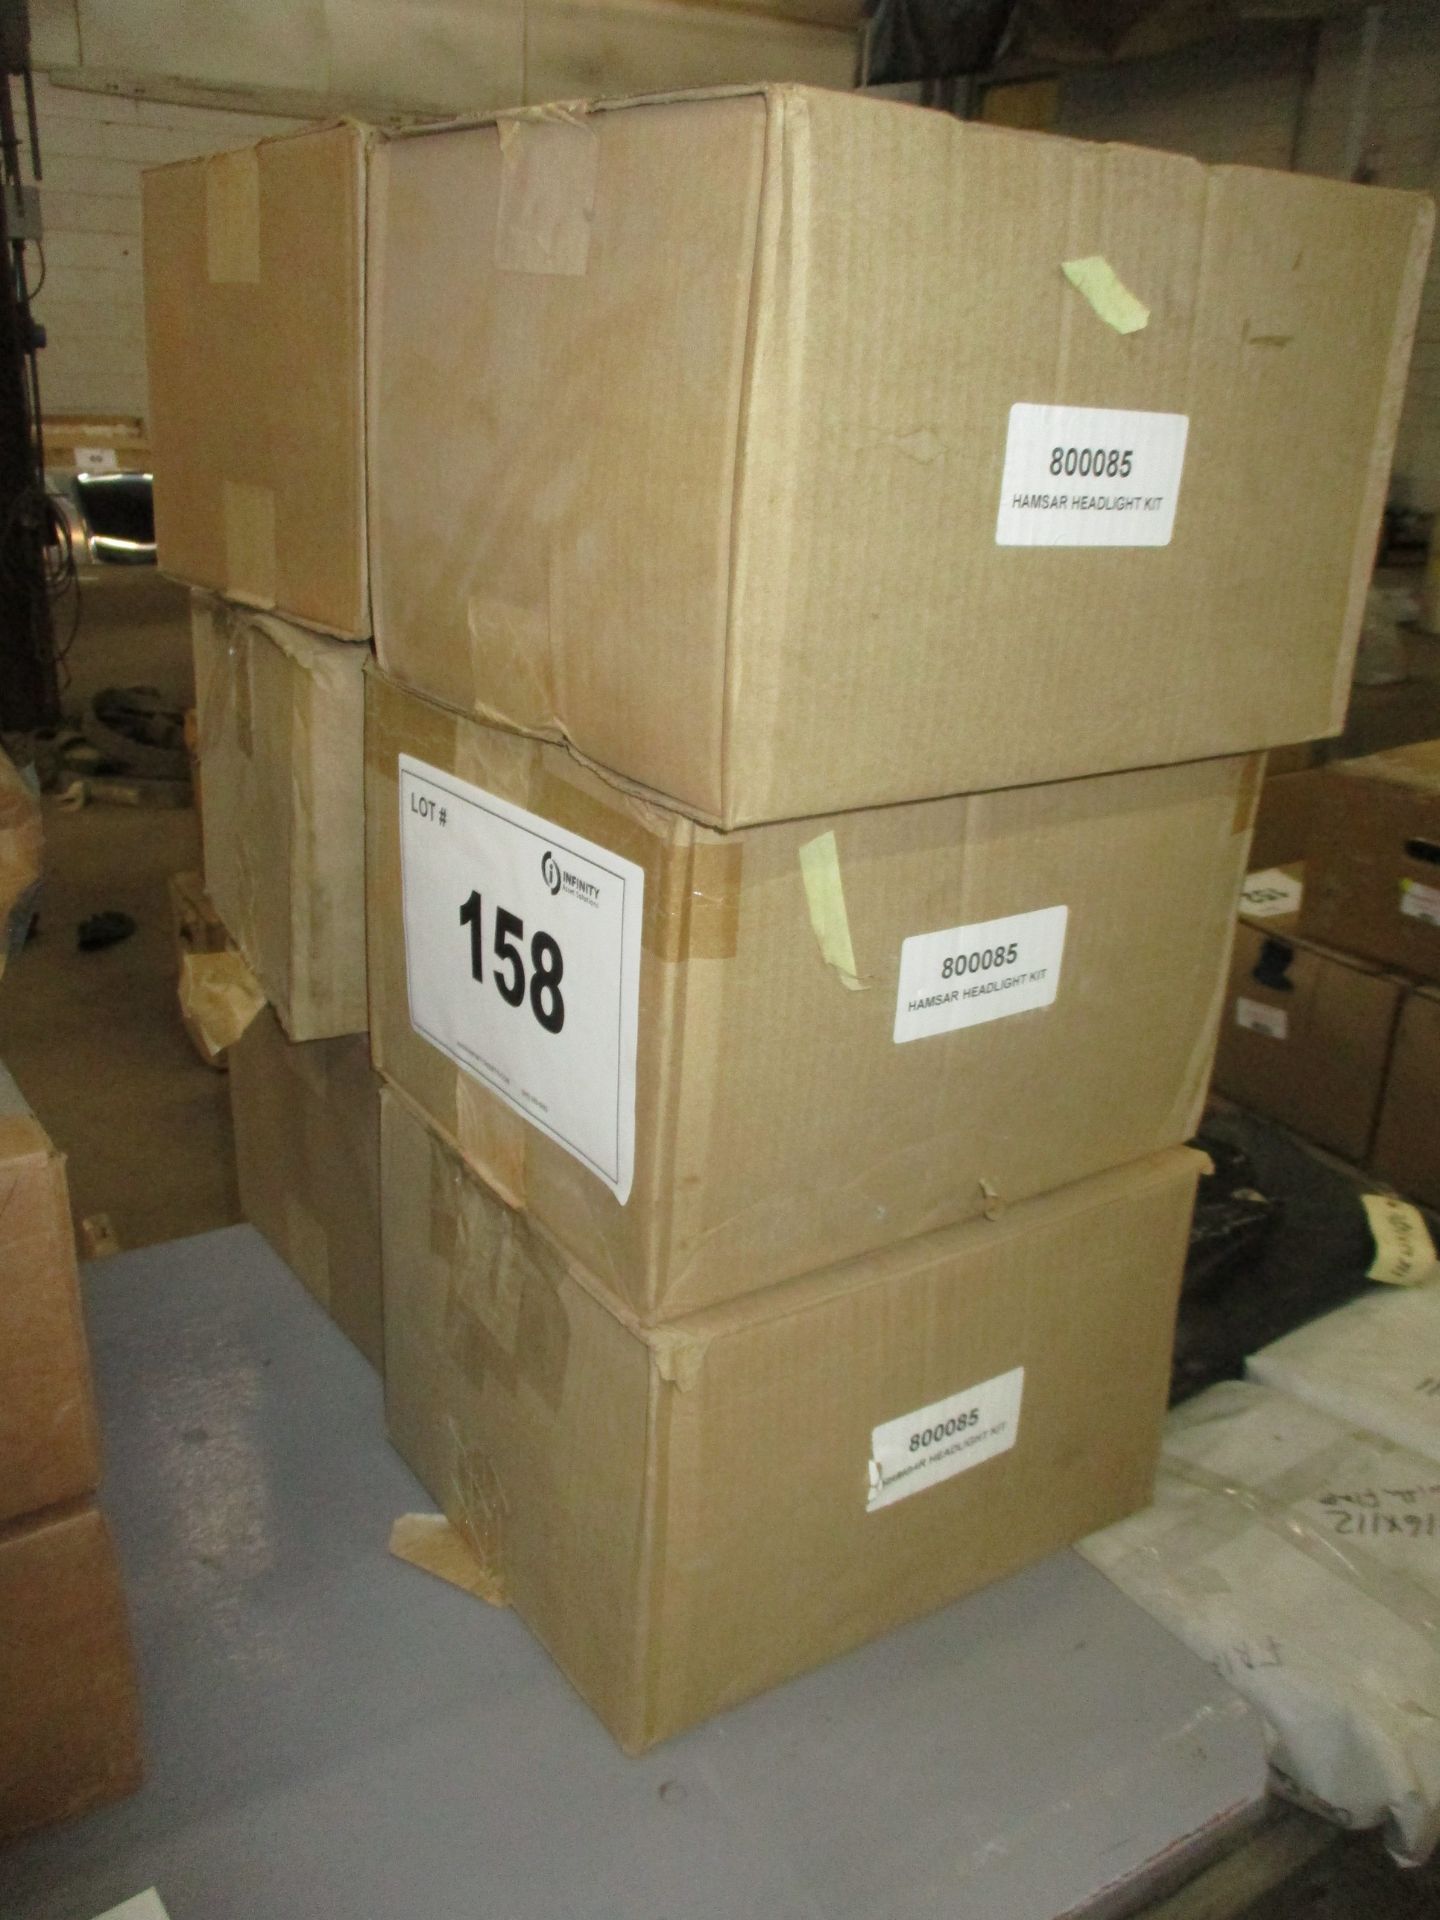 6 BOXES HAMSAR HEAD LIGHT KITS PART NO. 800085 - Image 3 of 3